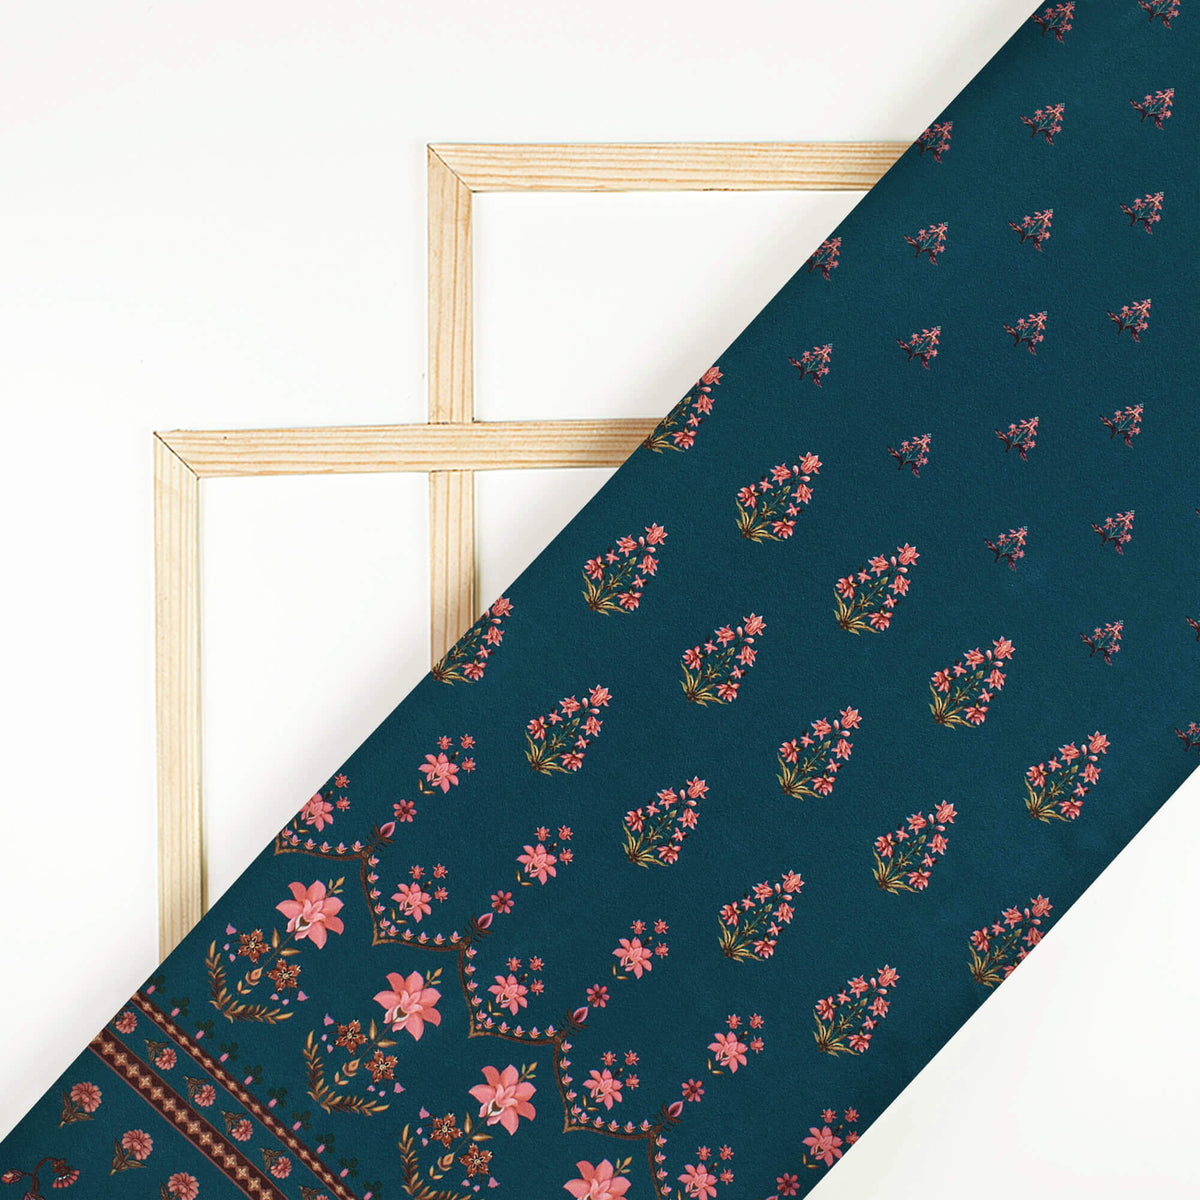 Peacock Blue And Rose Pink Floral Pattern Digital Print Crepe Silk Fabric